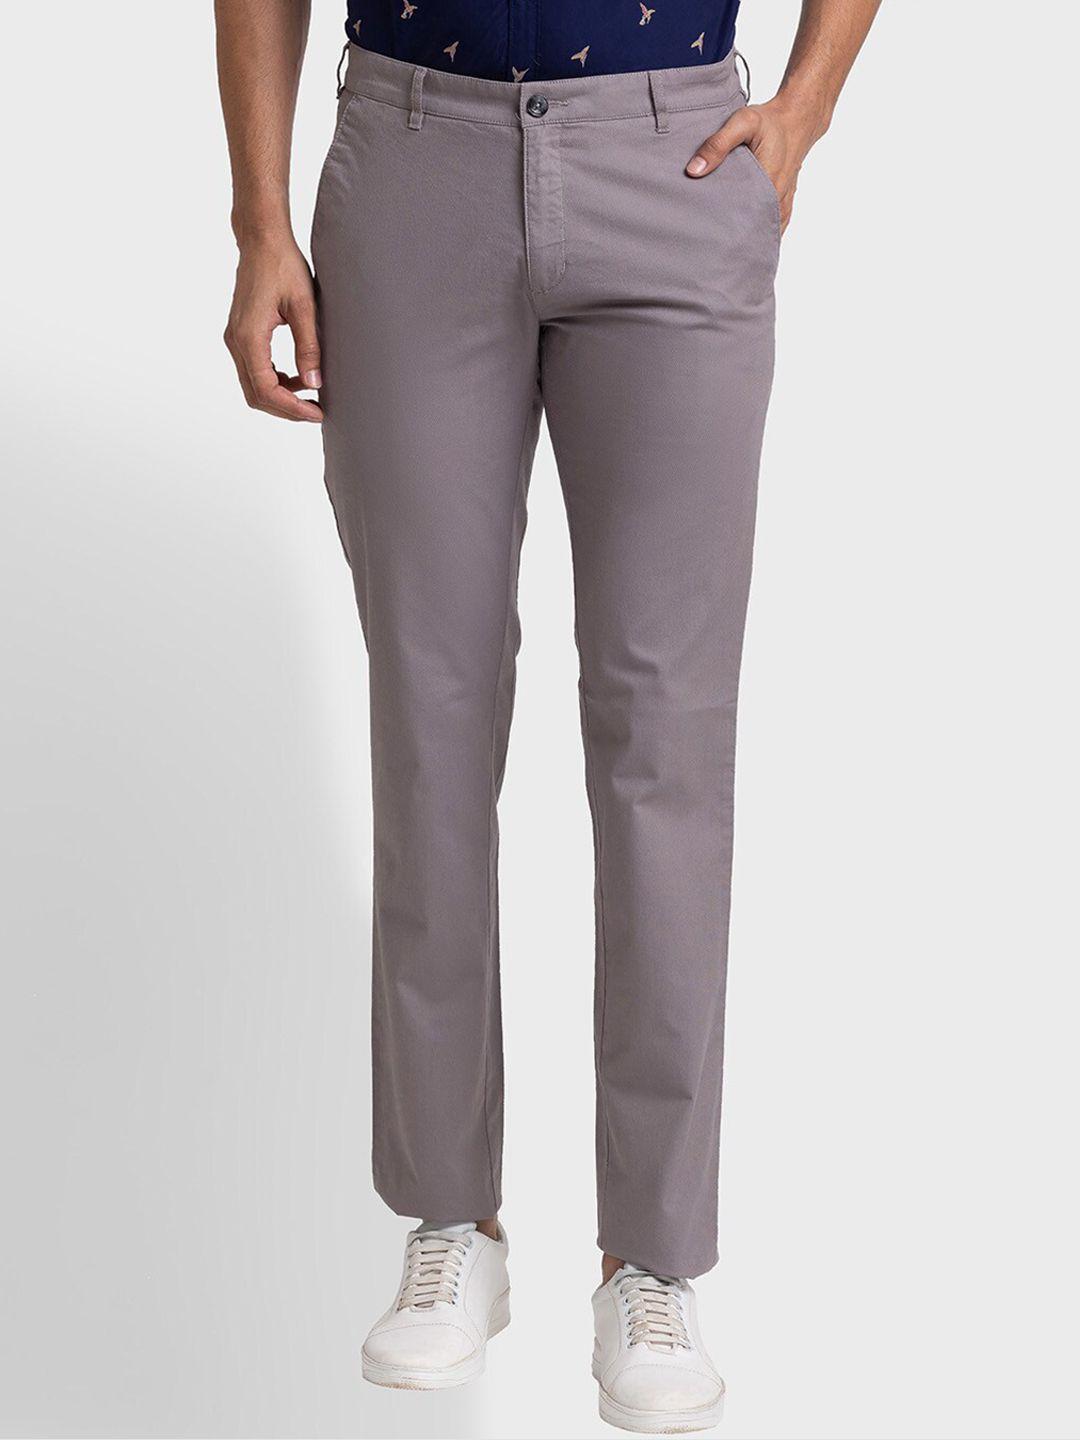 colorplus men grey trousers